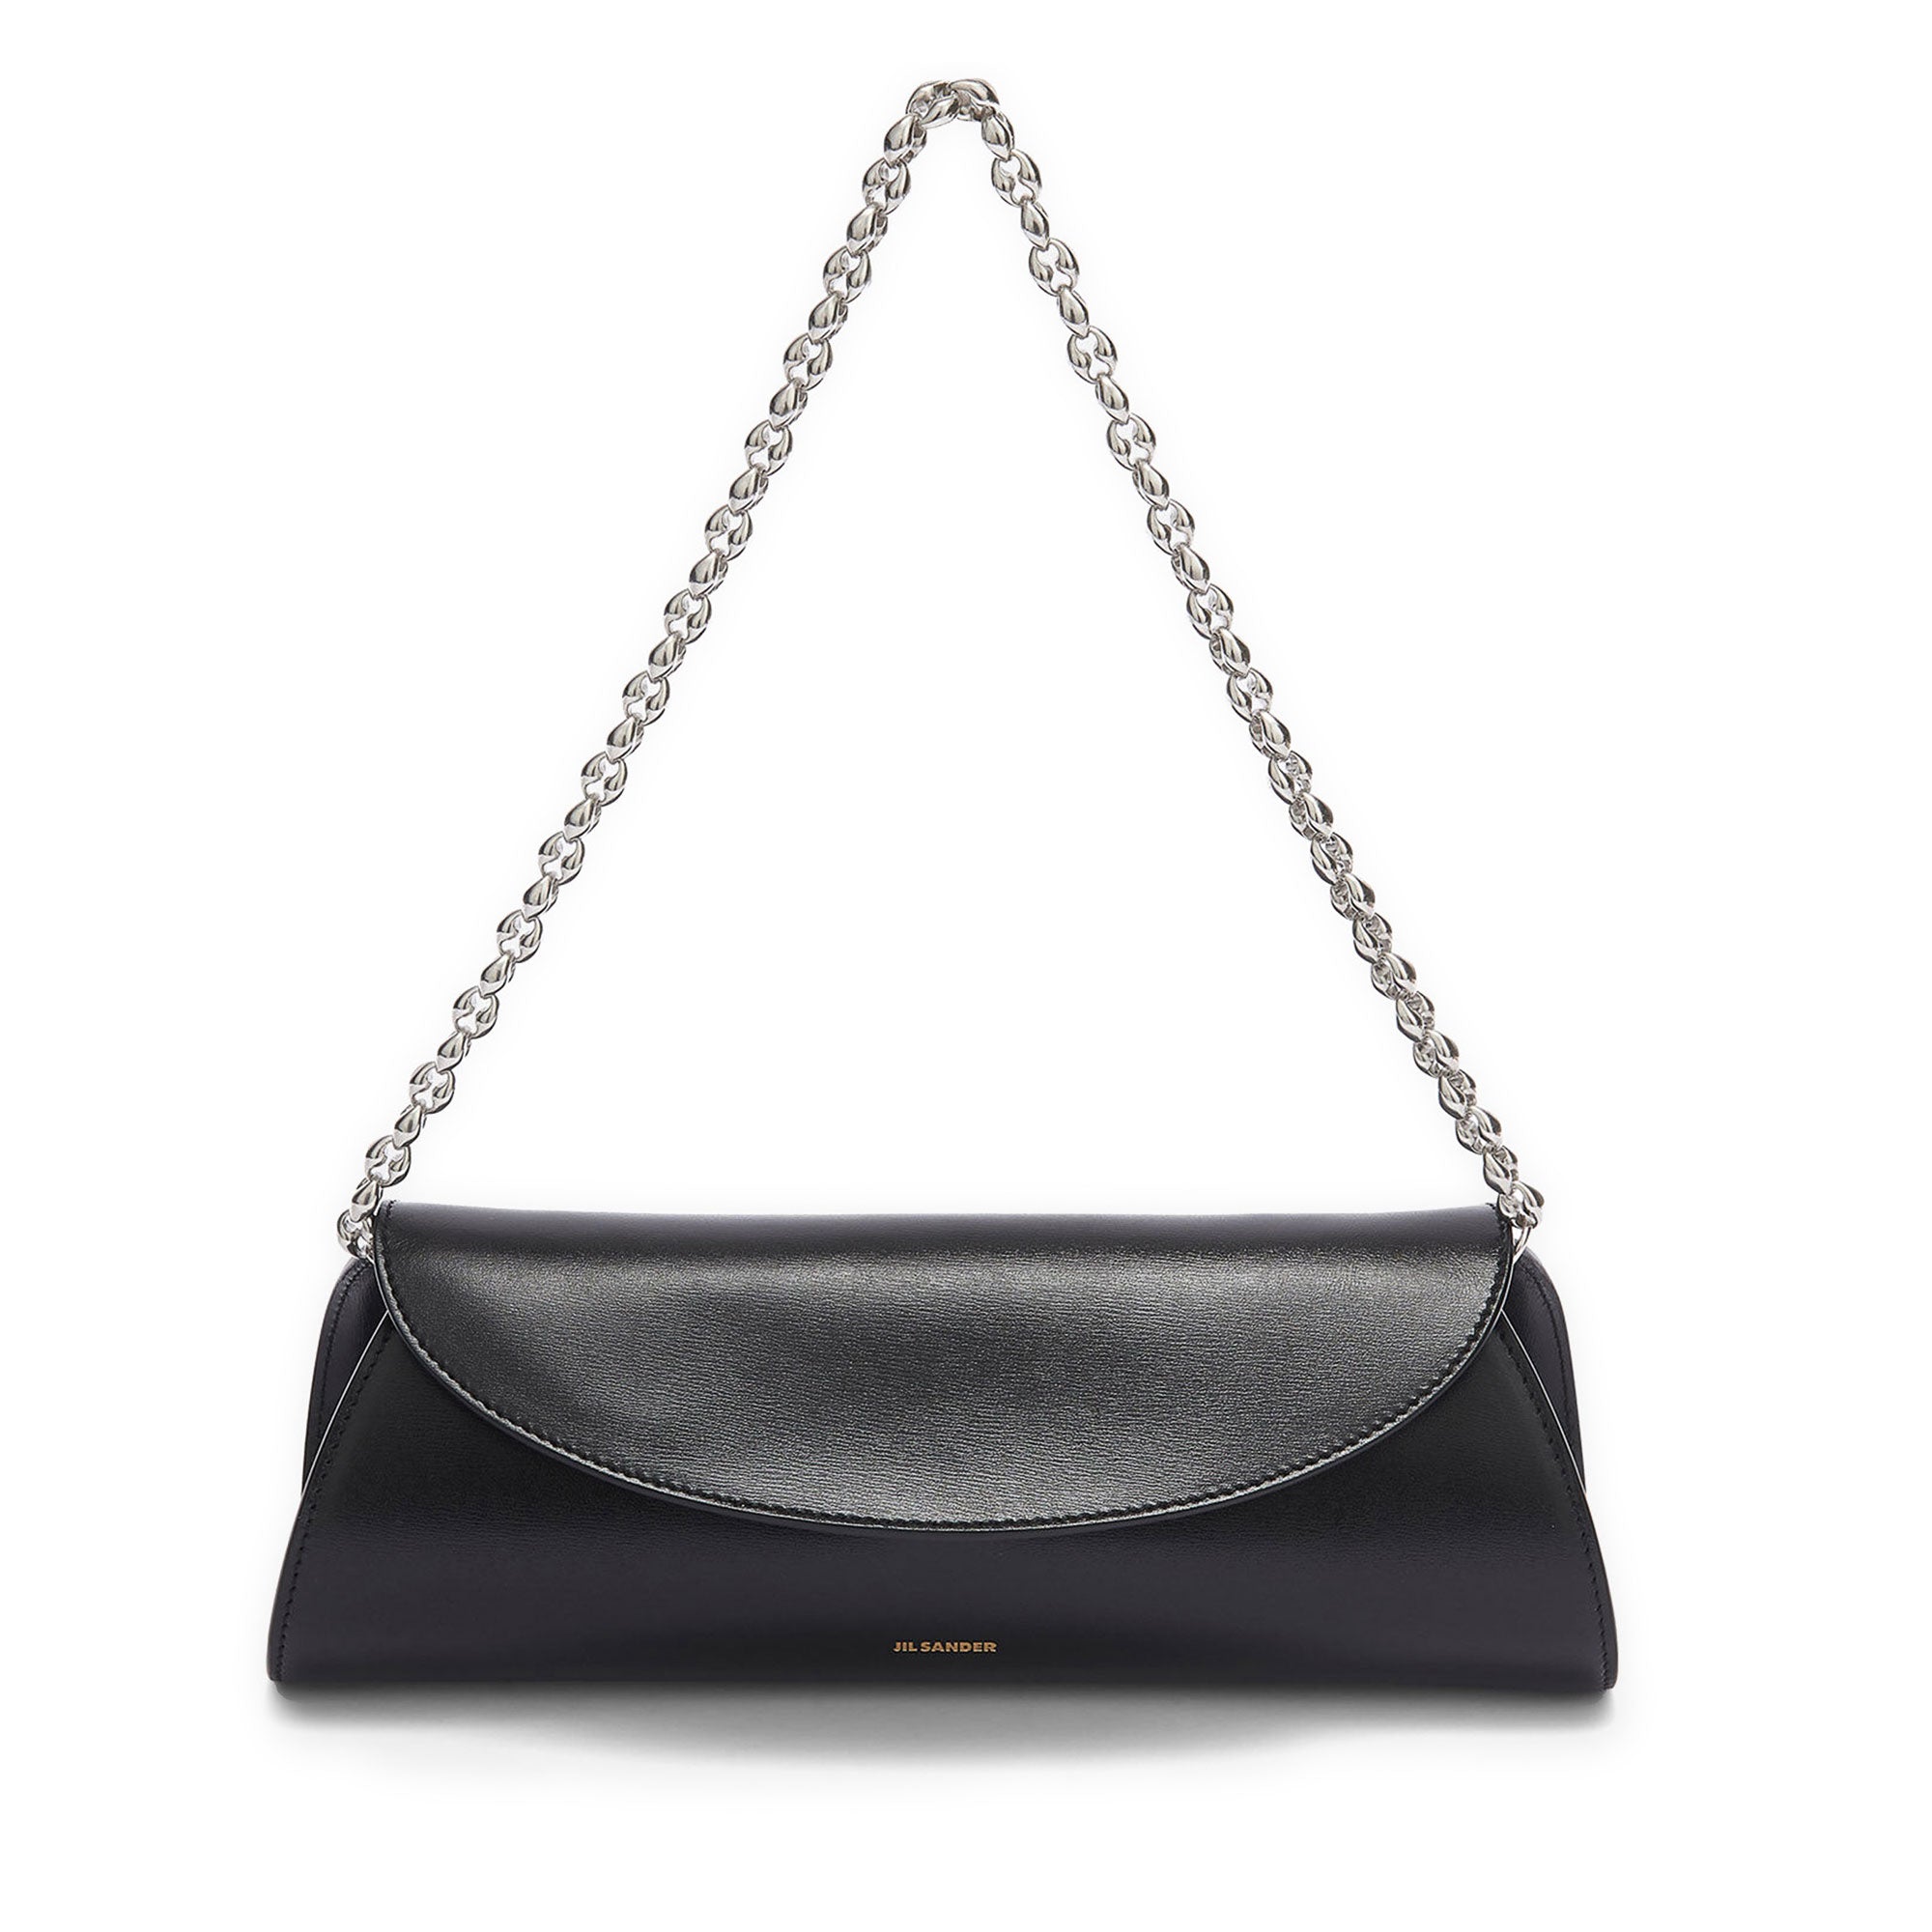 Jil Sander - Women’s Cannolo Small Chain Bag - (Black) view 1